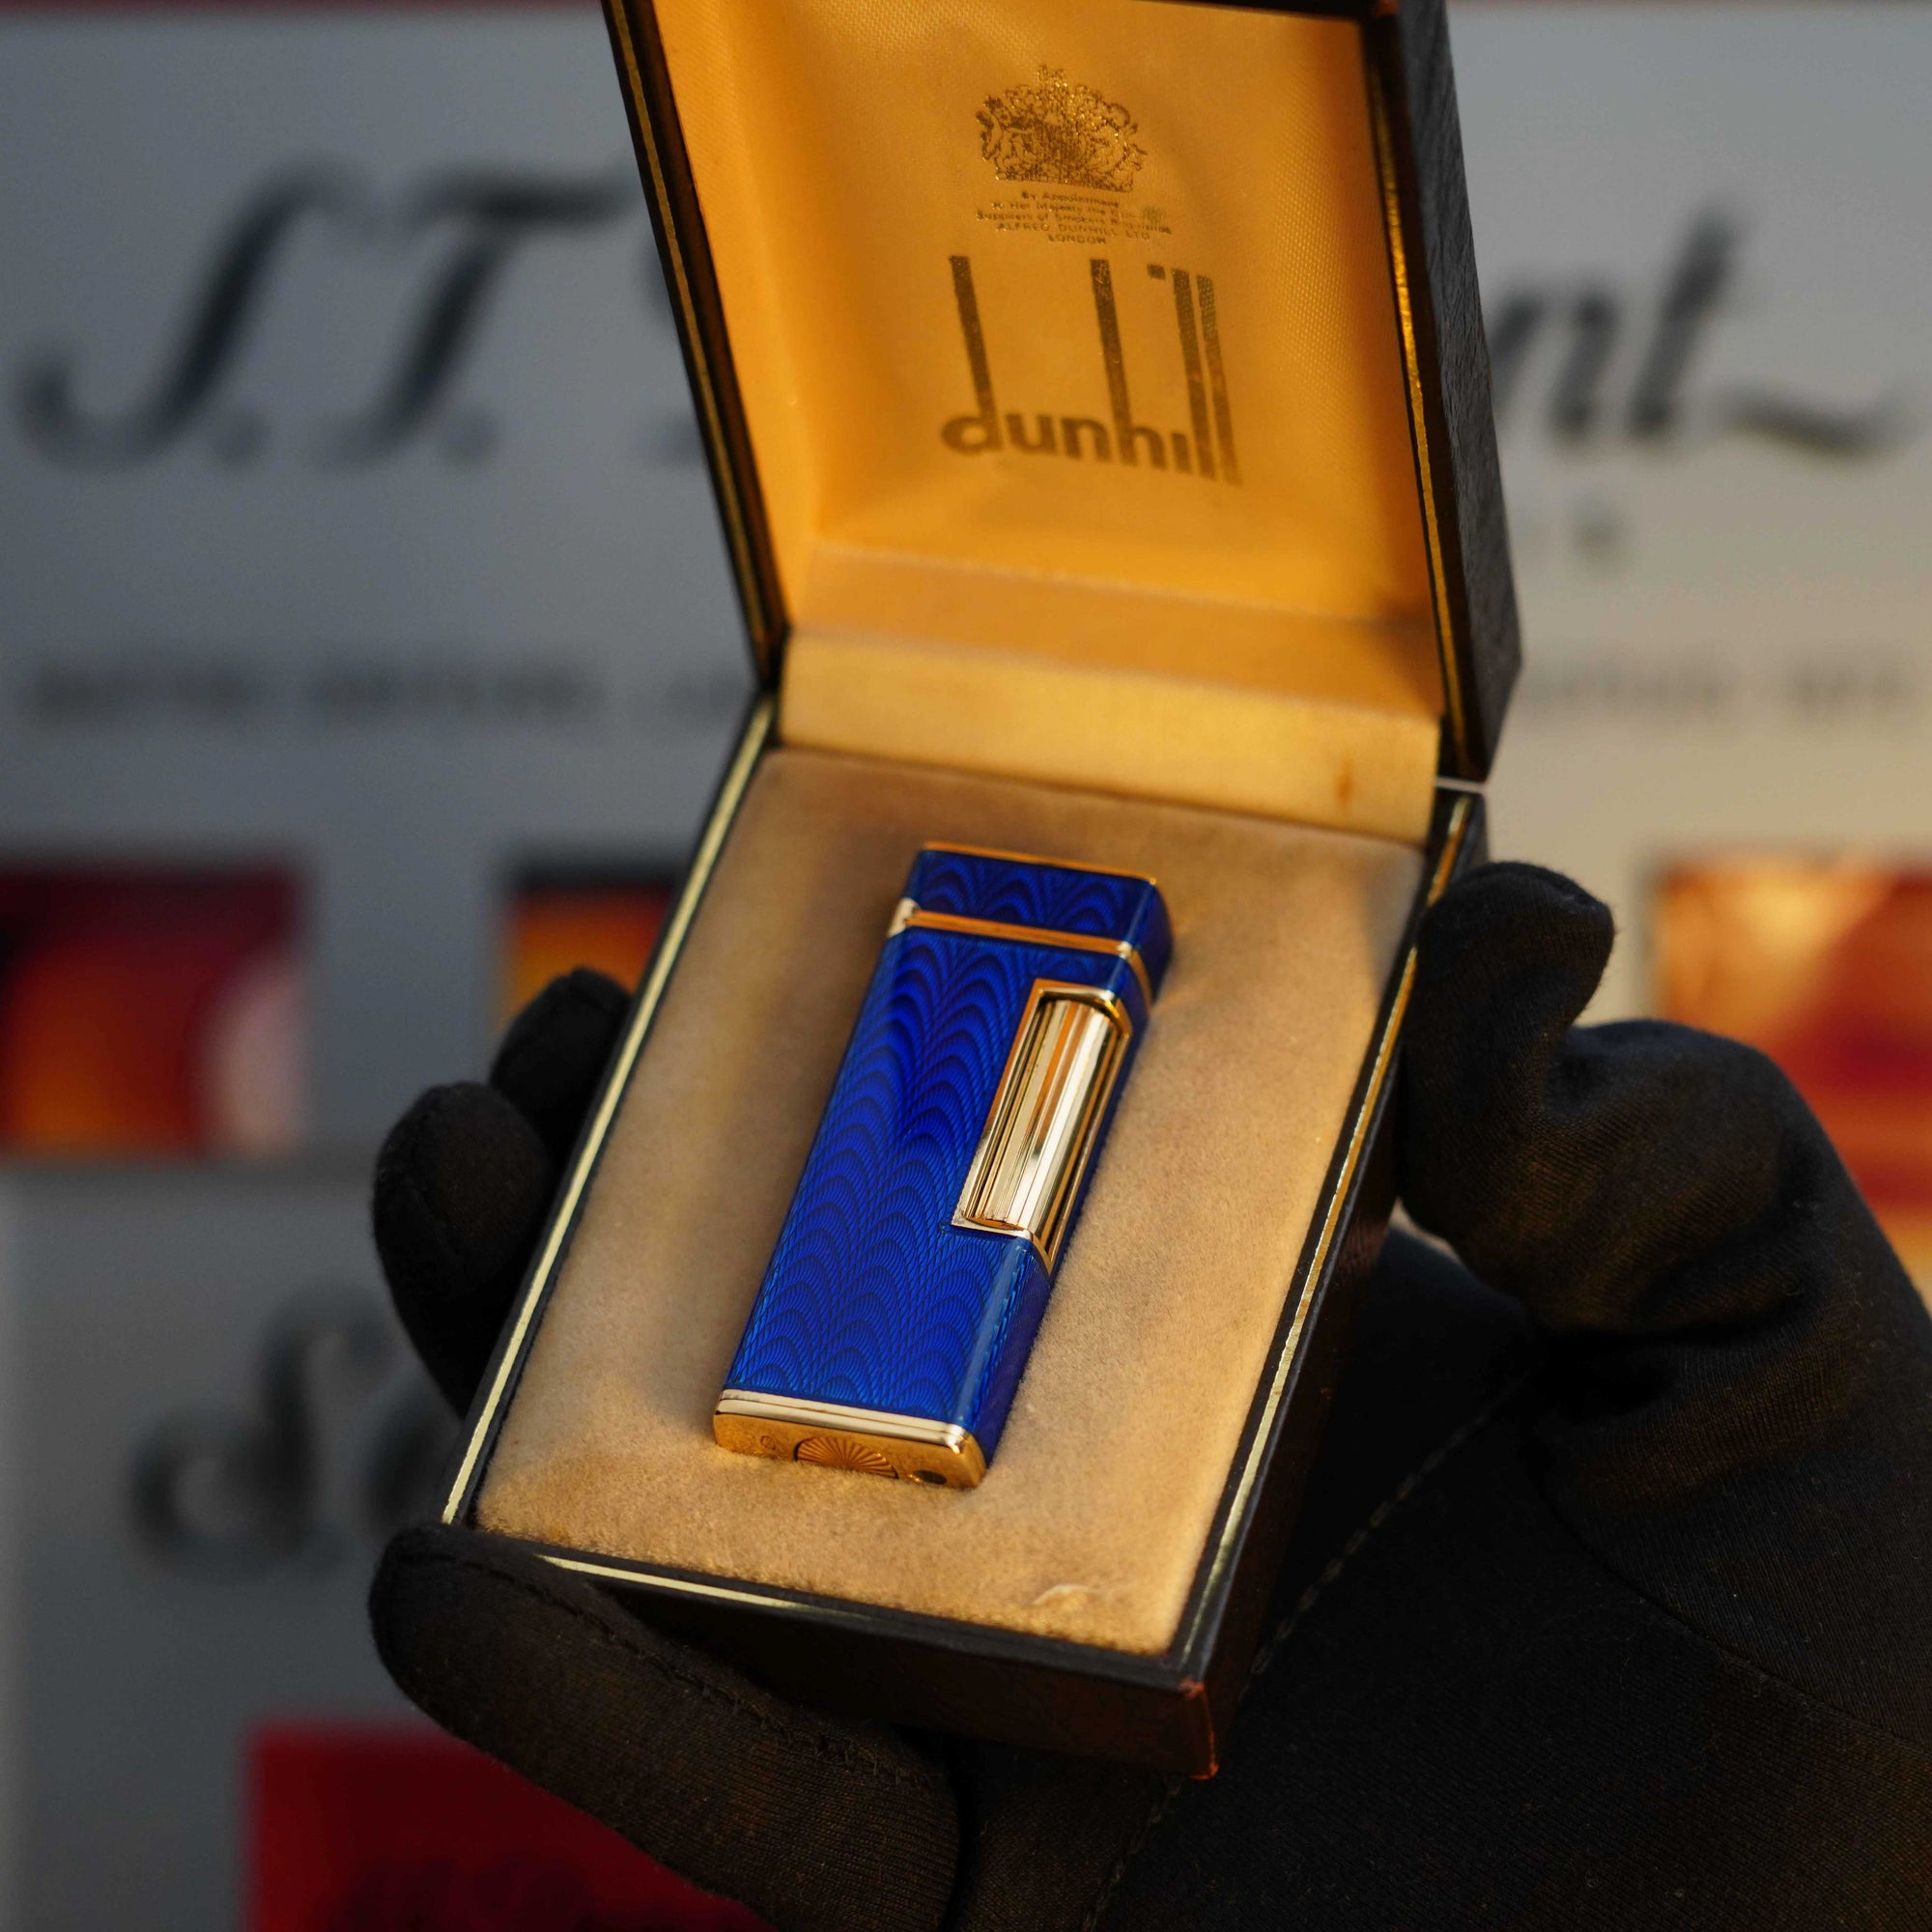 Vintage 1970 Extremly rare Dunhill Rollagas Solid Gold Guilloché Blue Enamel 18k Hallmark Lighter